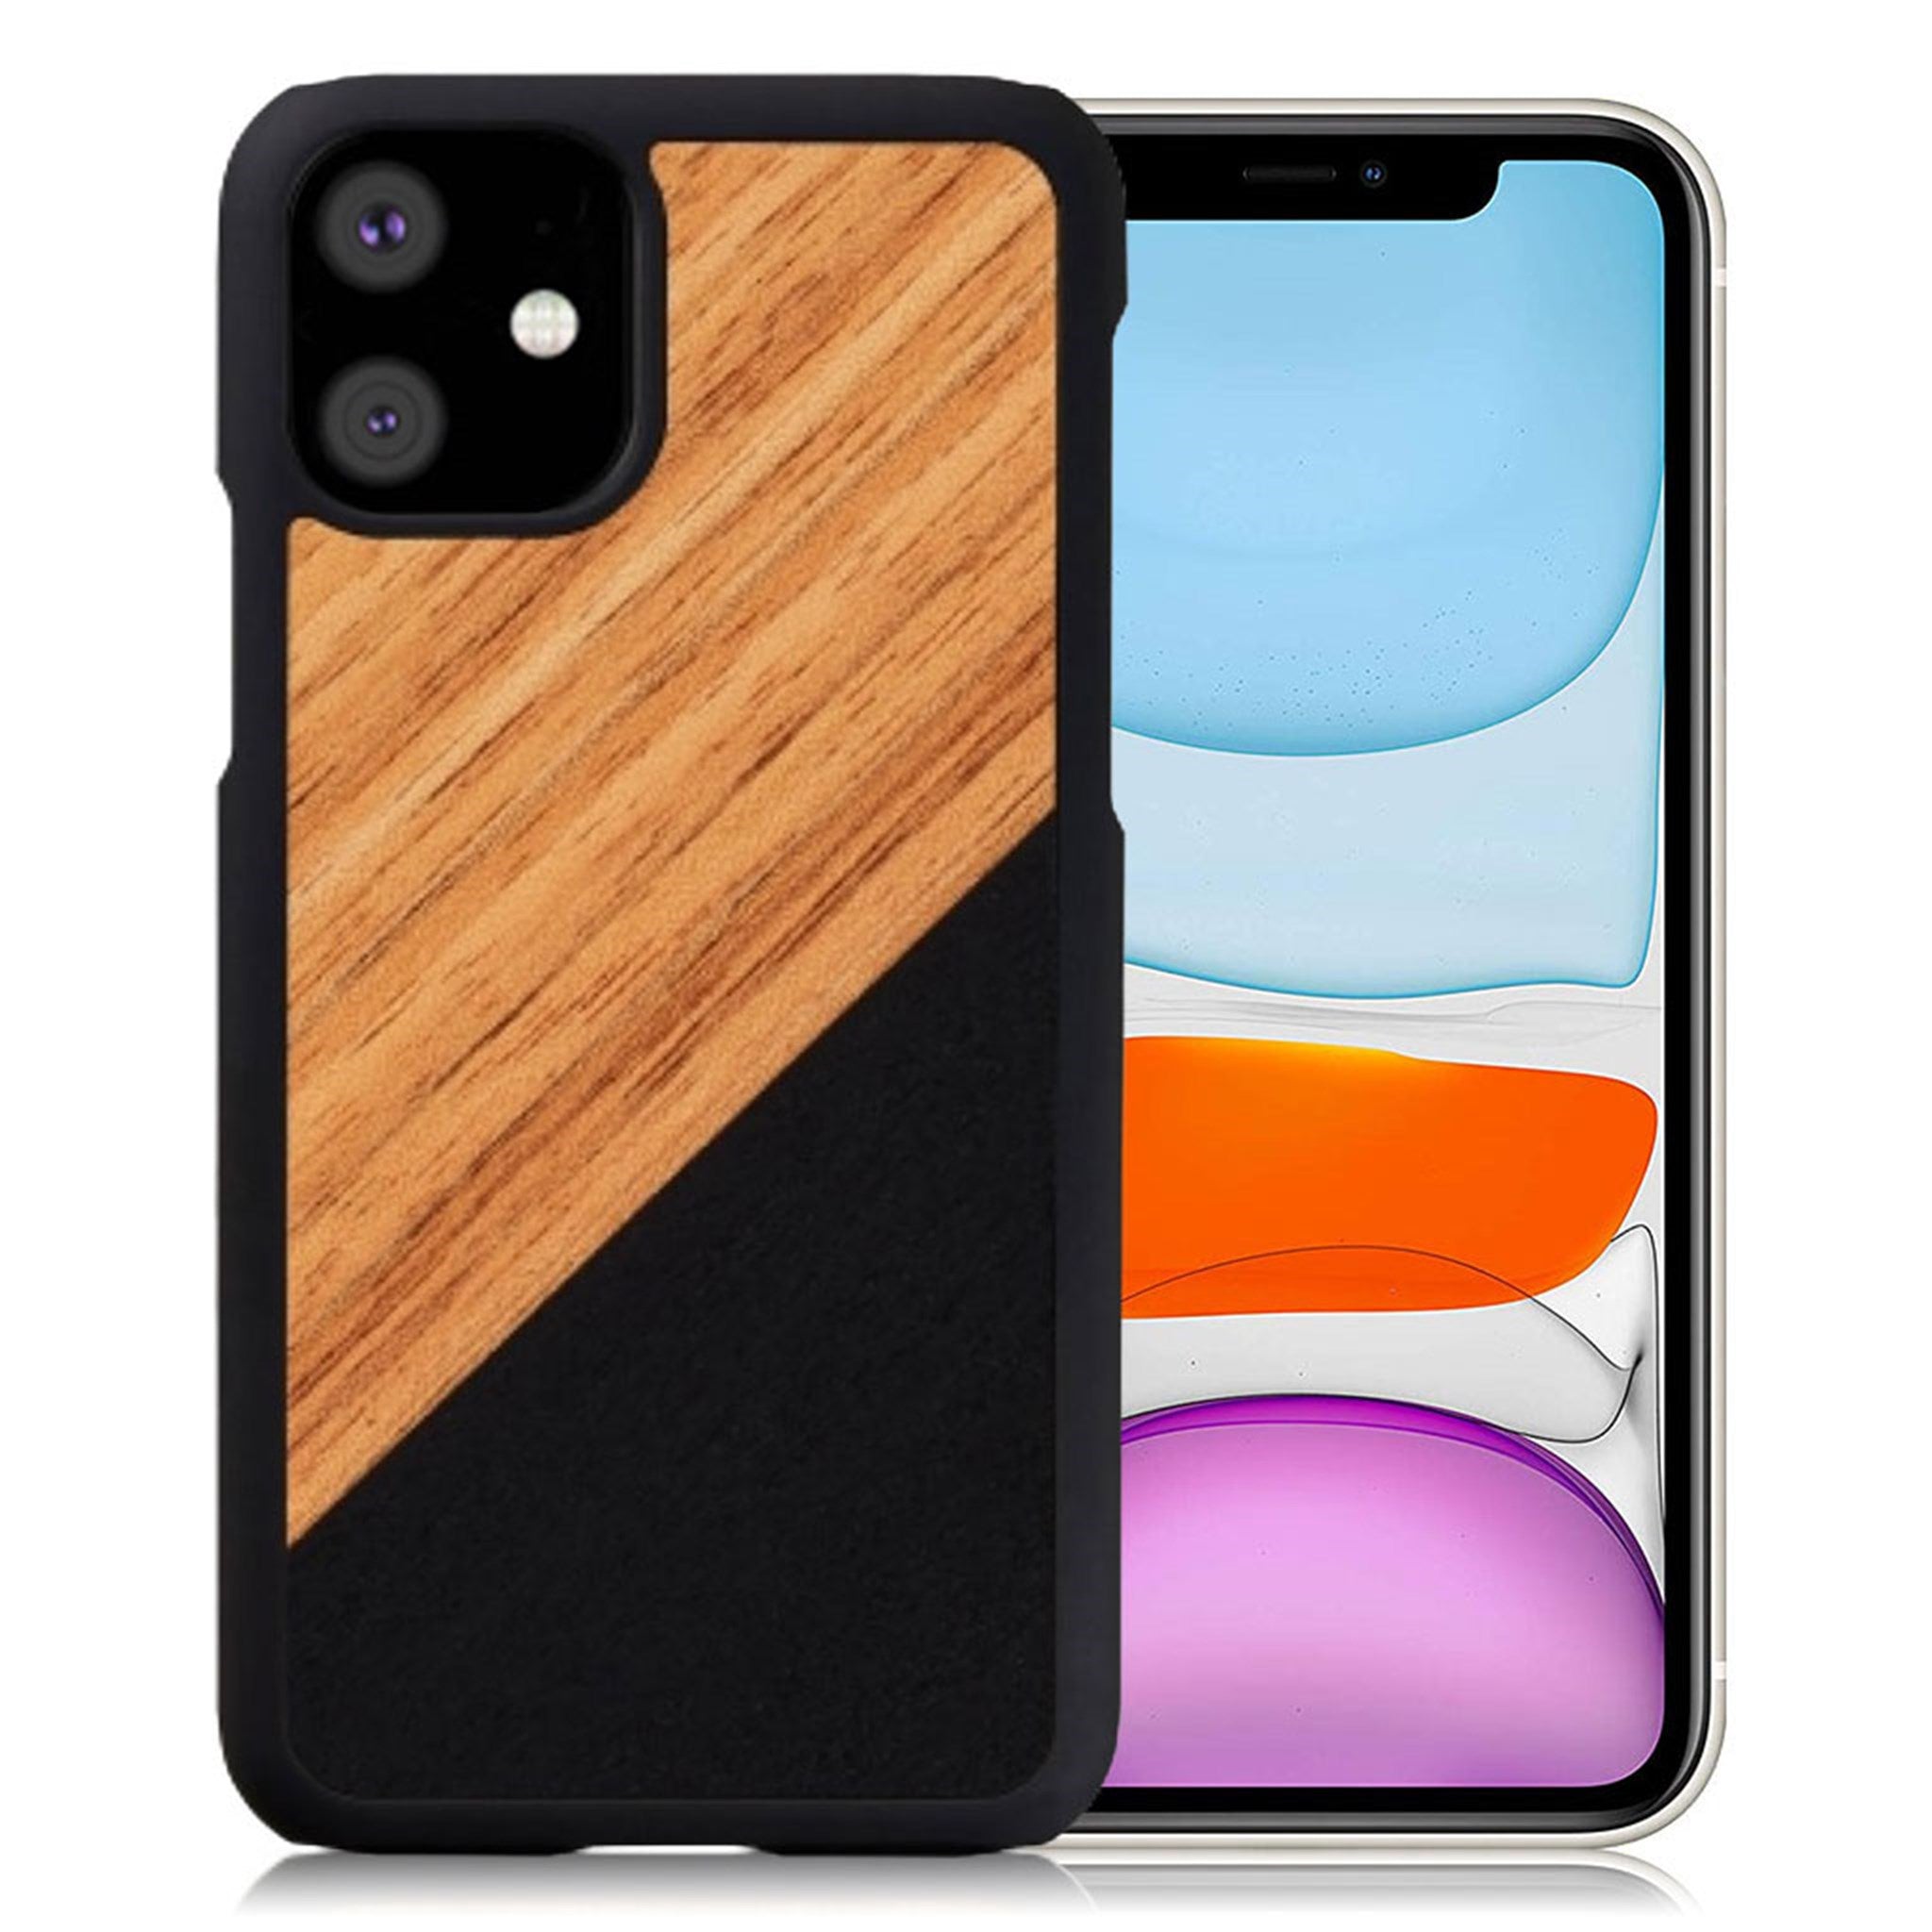 Man&Wood premium case for iPhone 11 - Western